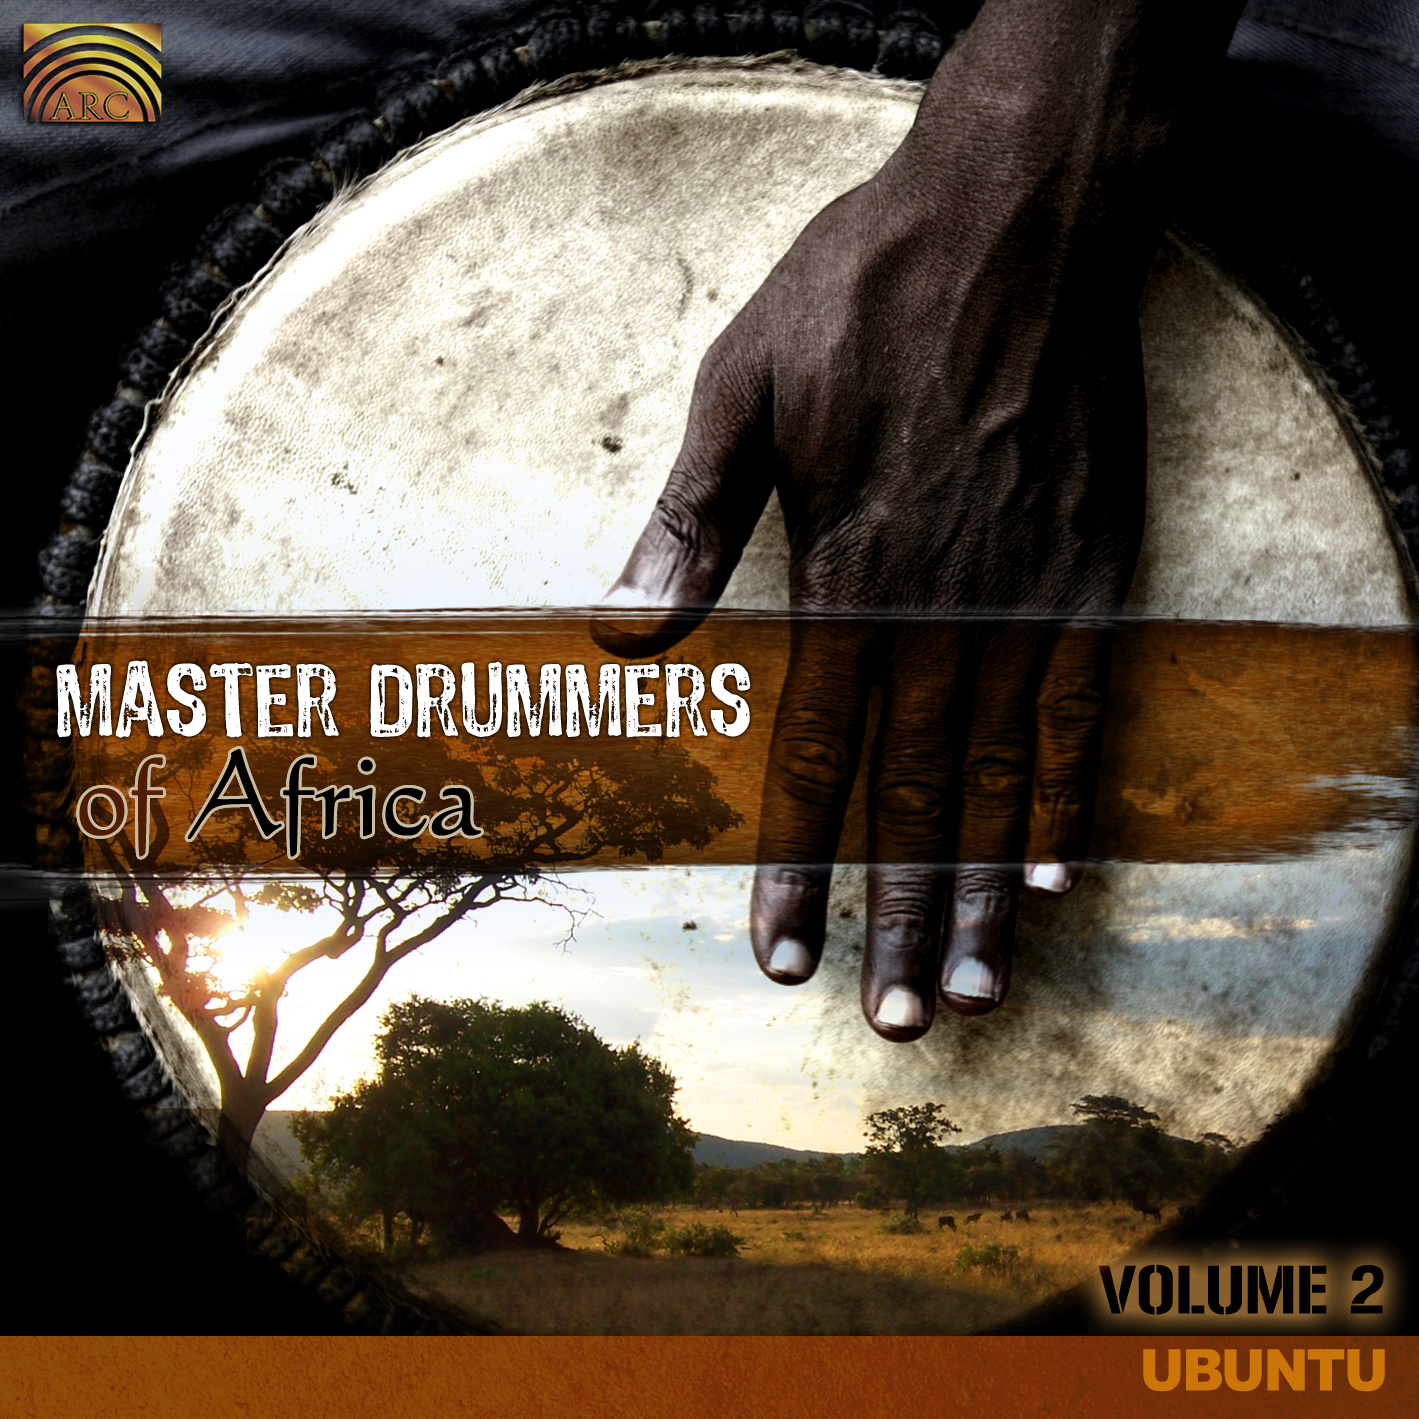 EUCD2280 Master Drummers of Africa Volume 2 - Ubuntu